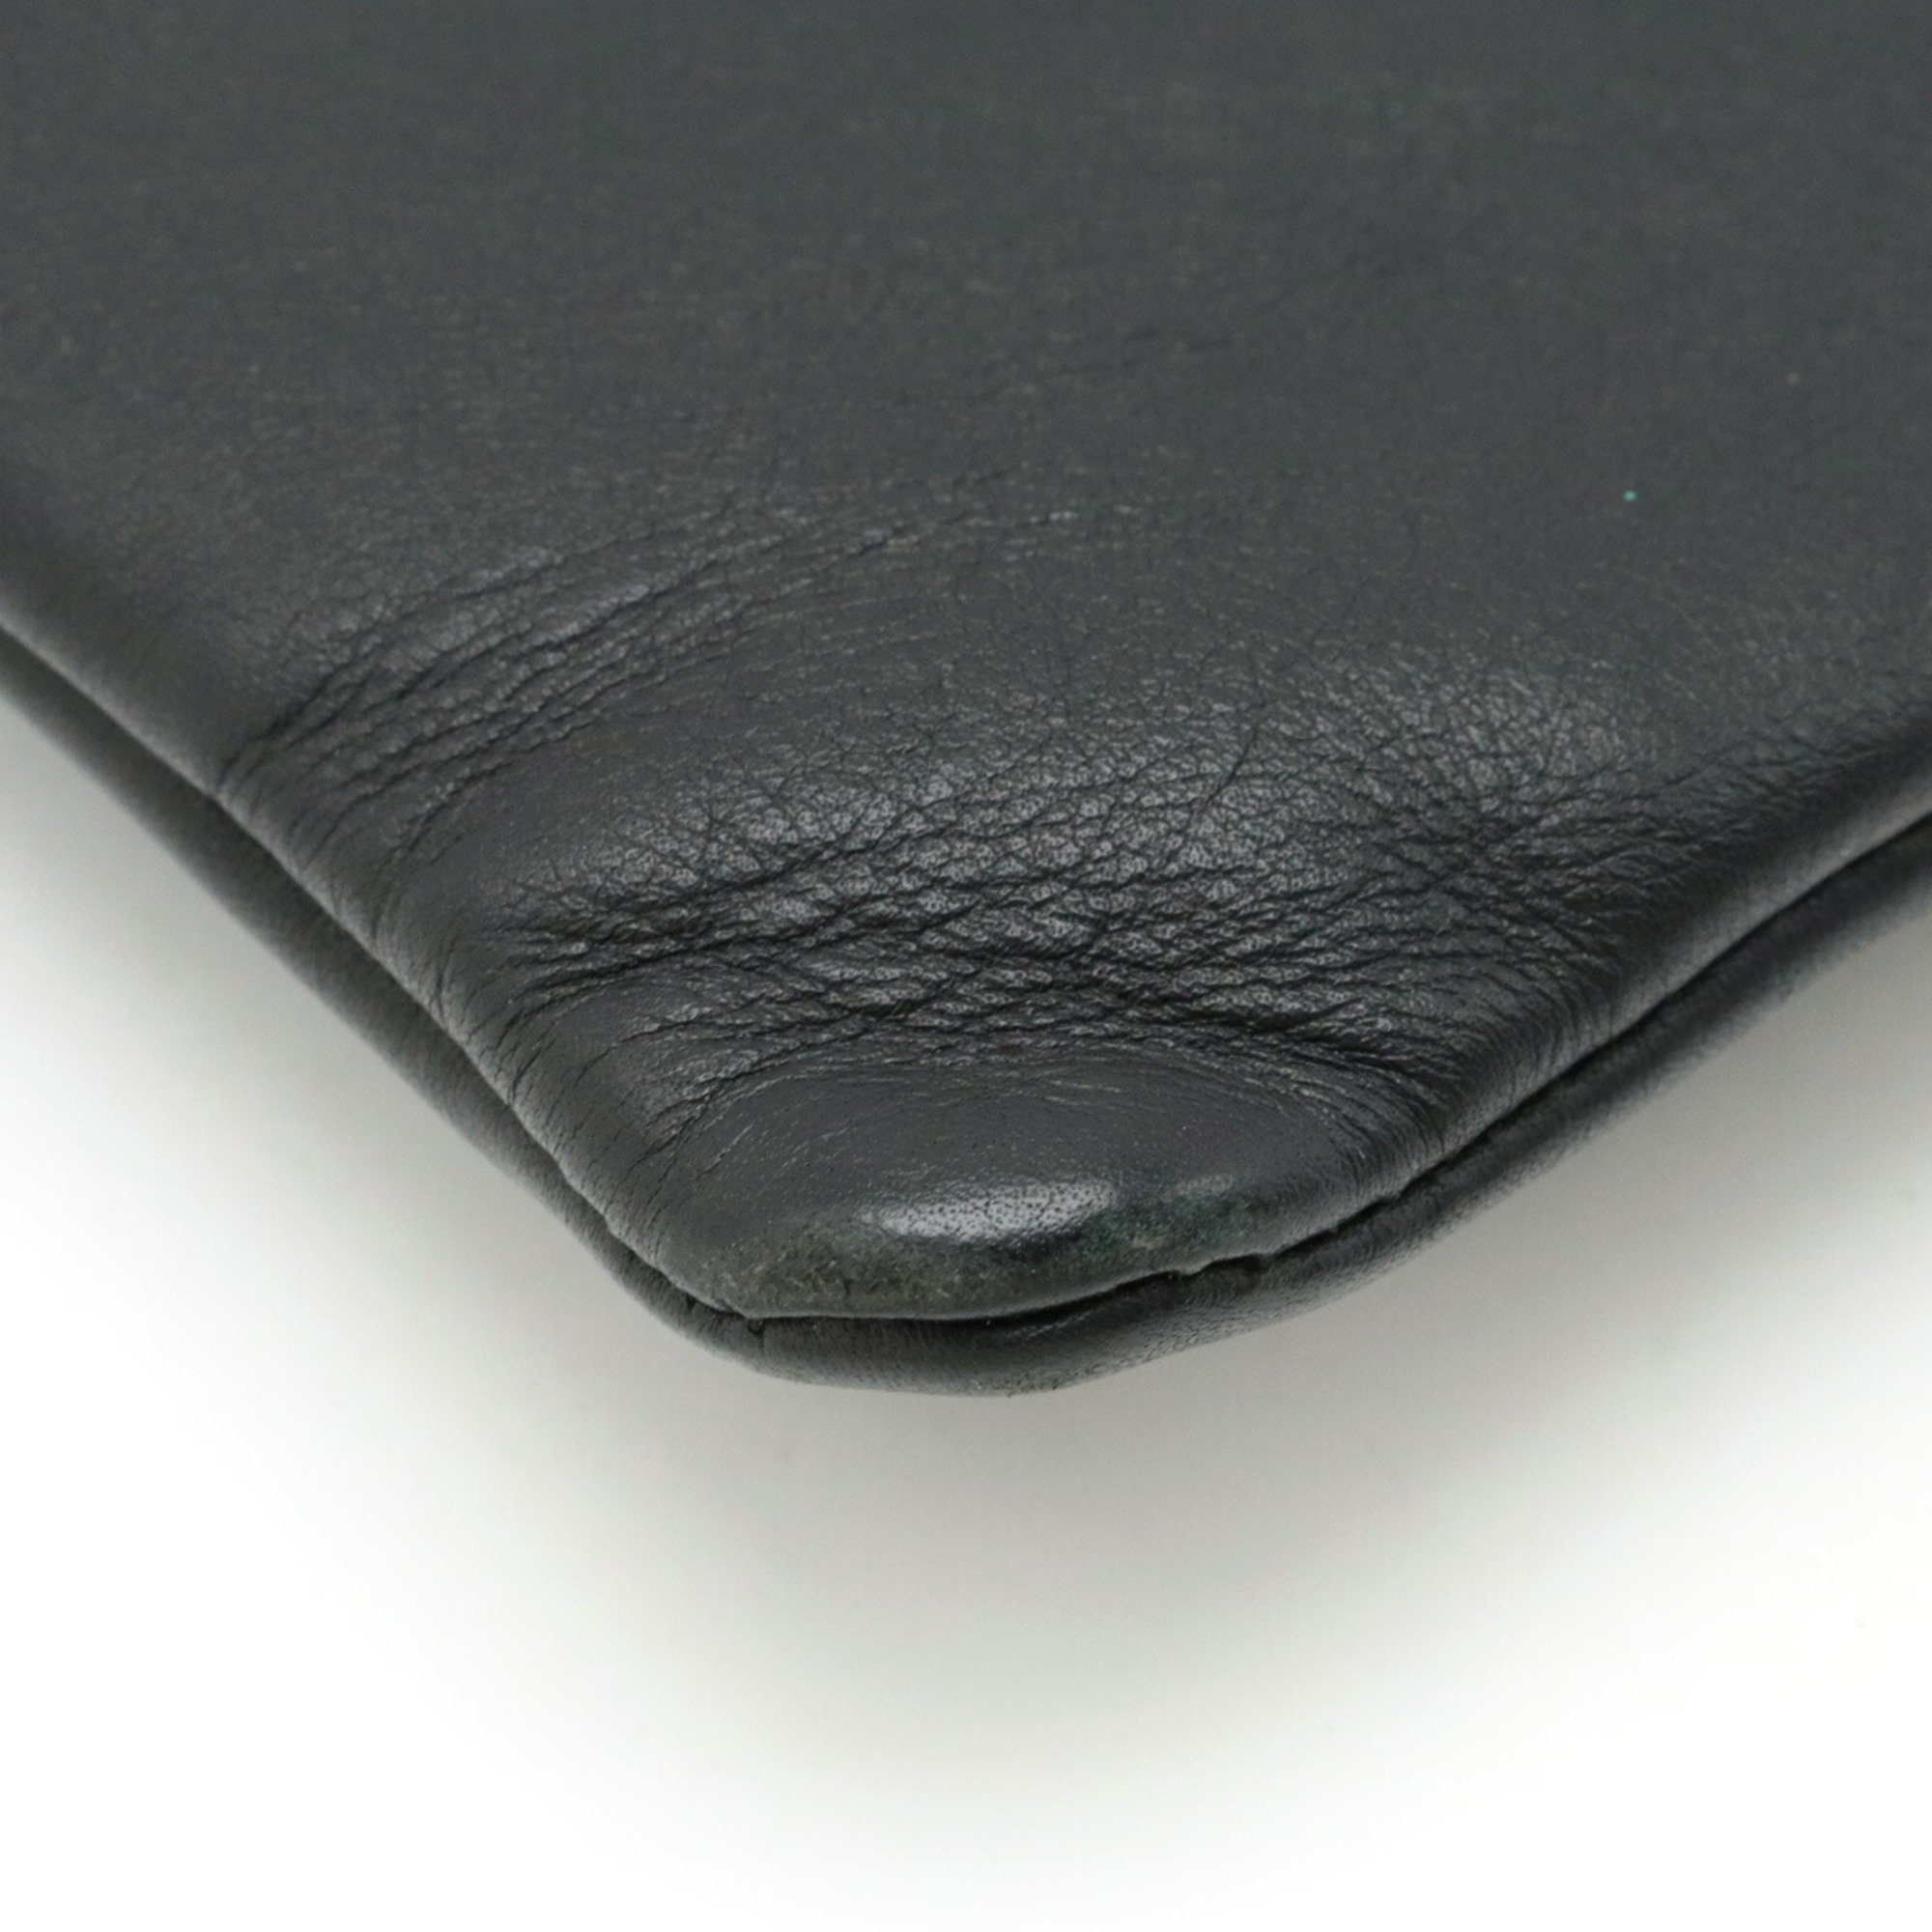 GUCCI GG Marmont shoulder bag, pochette, quilted leather, black, 453878